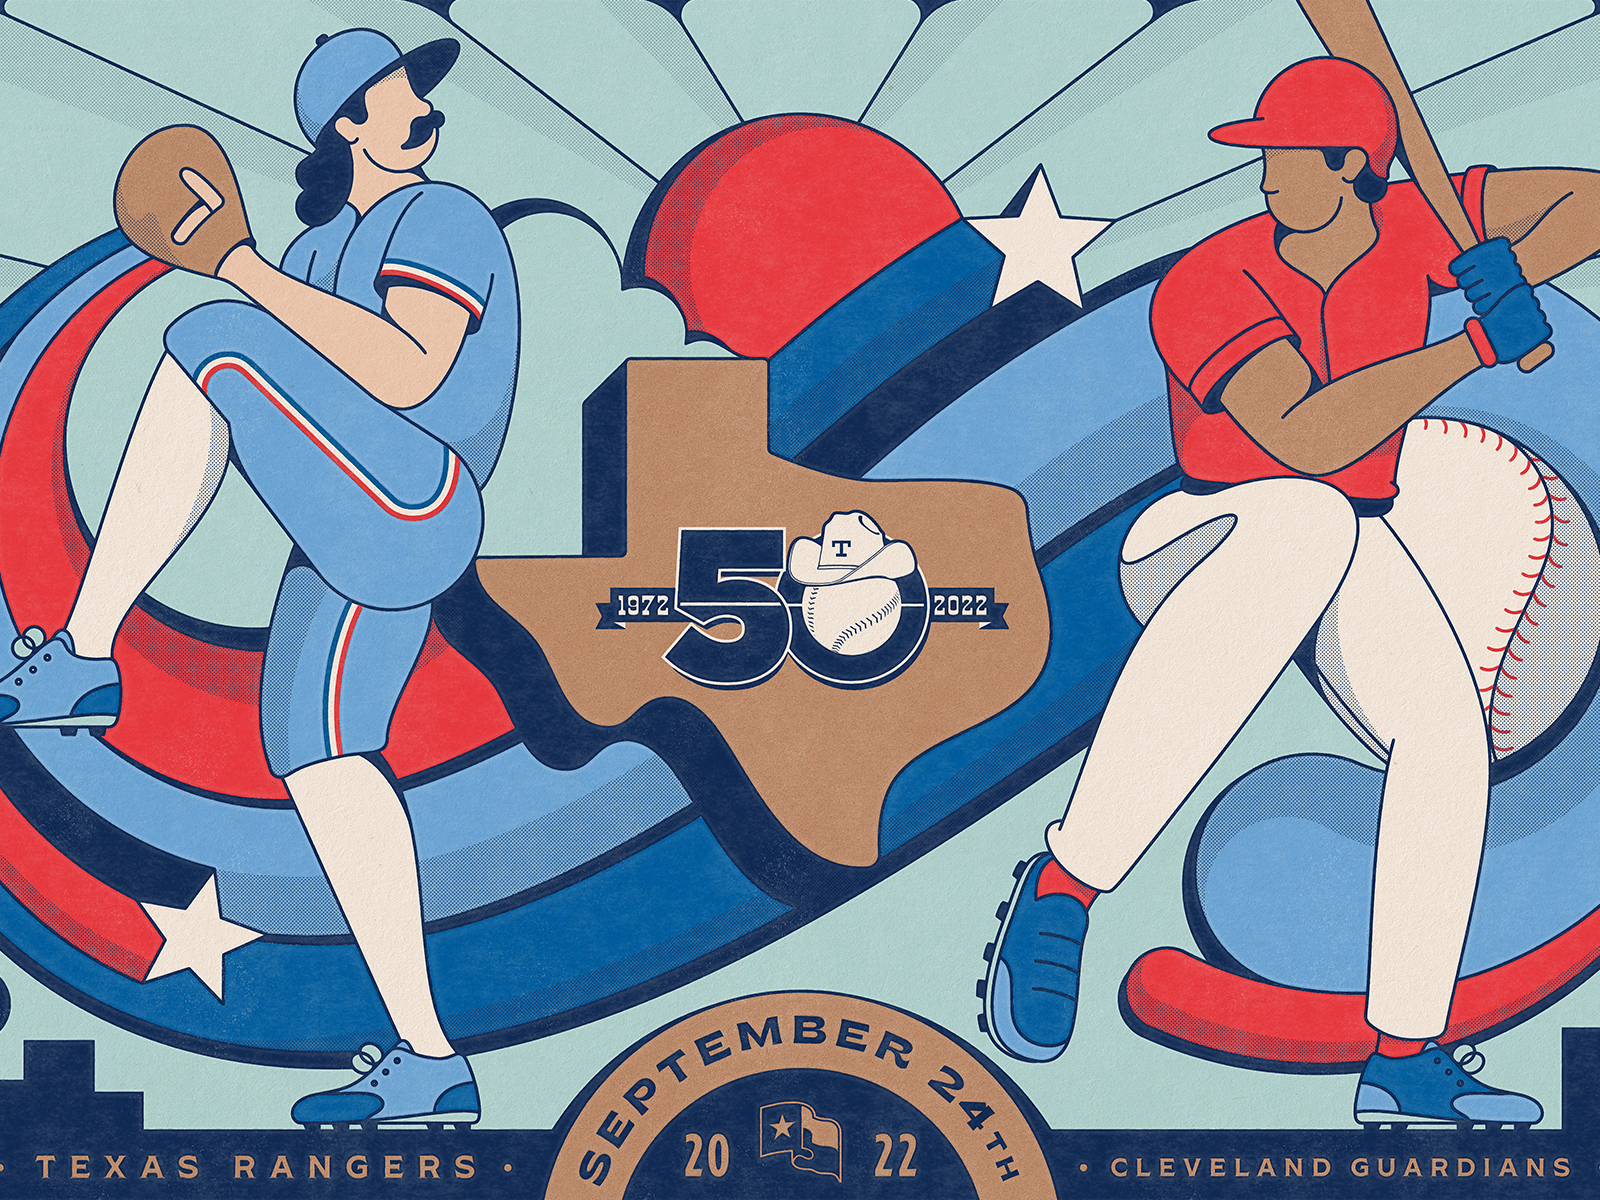 Texas Rangers 50th Anniversary Poster by Pavlov Visuals on Dribbble